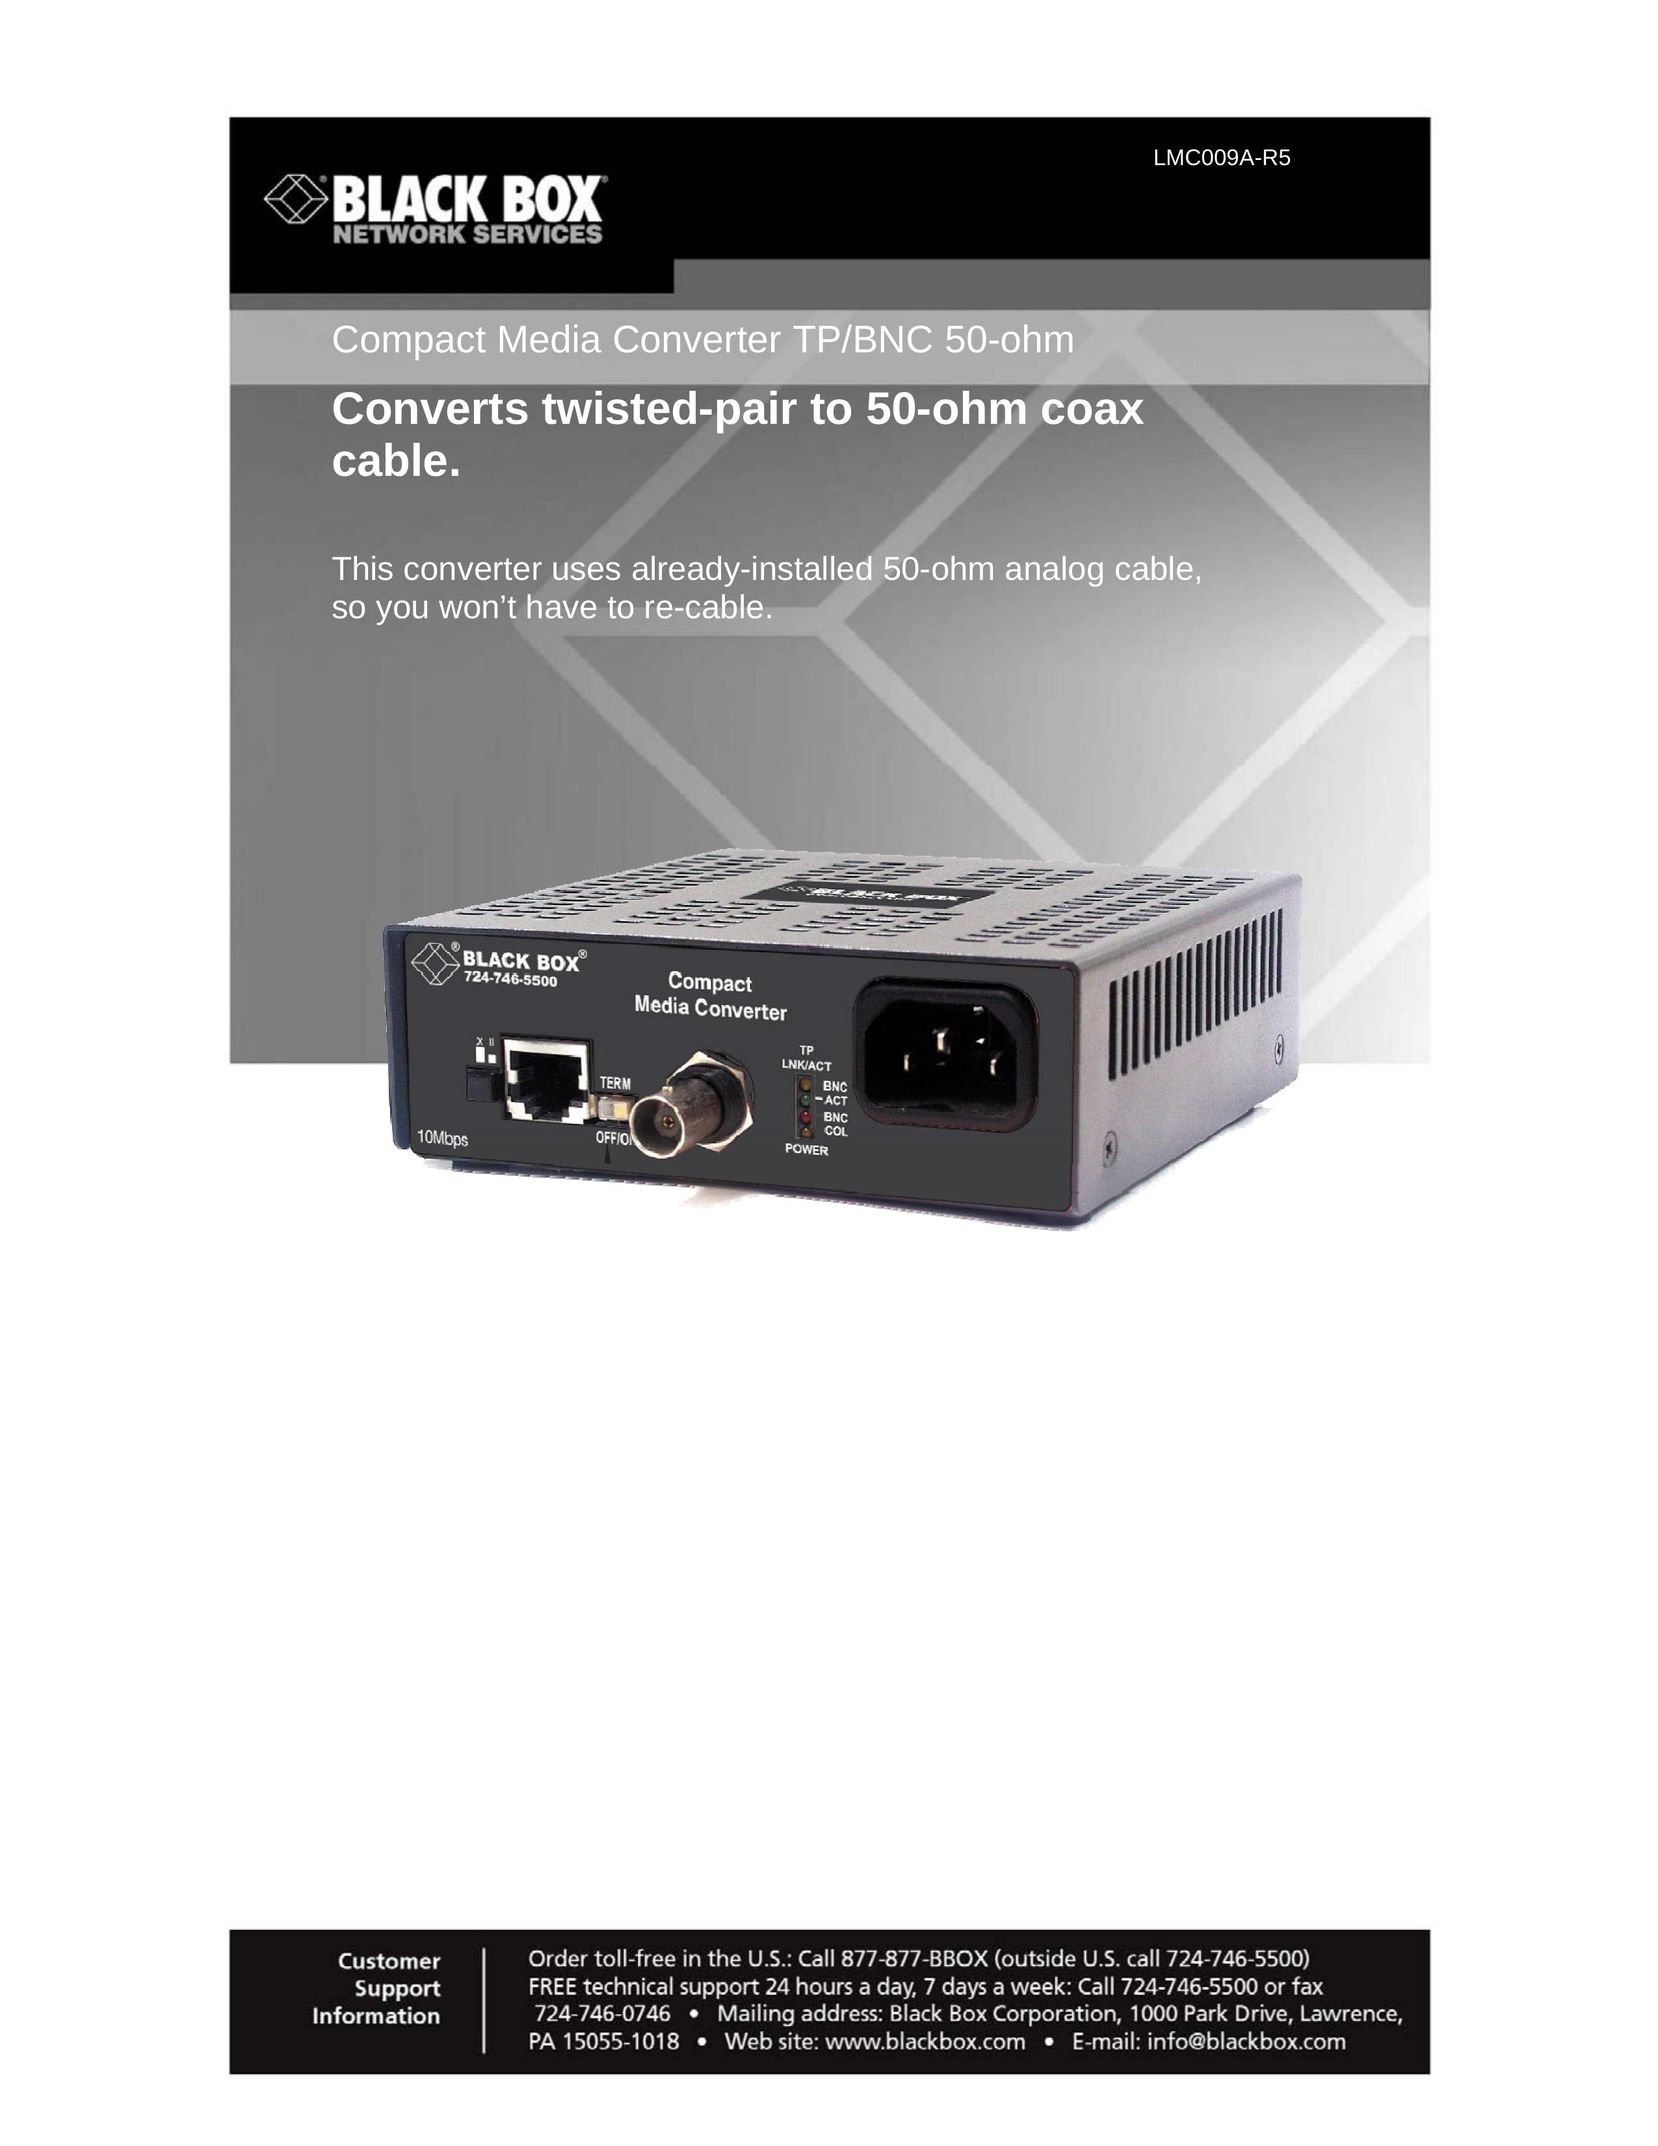 Black Box LMCD09A-FI5 TV Converter Box User Manual